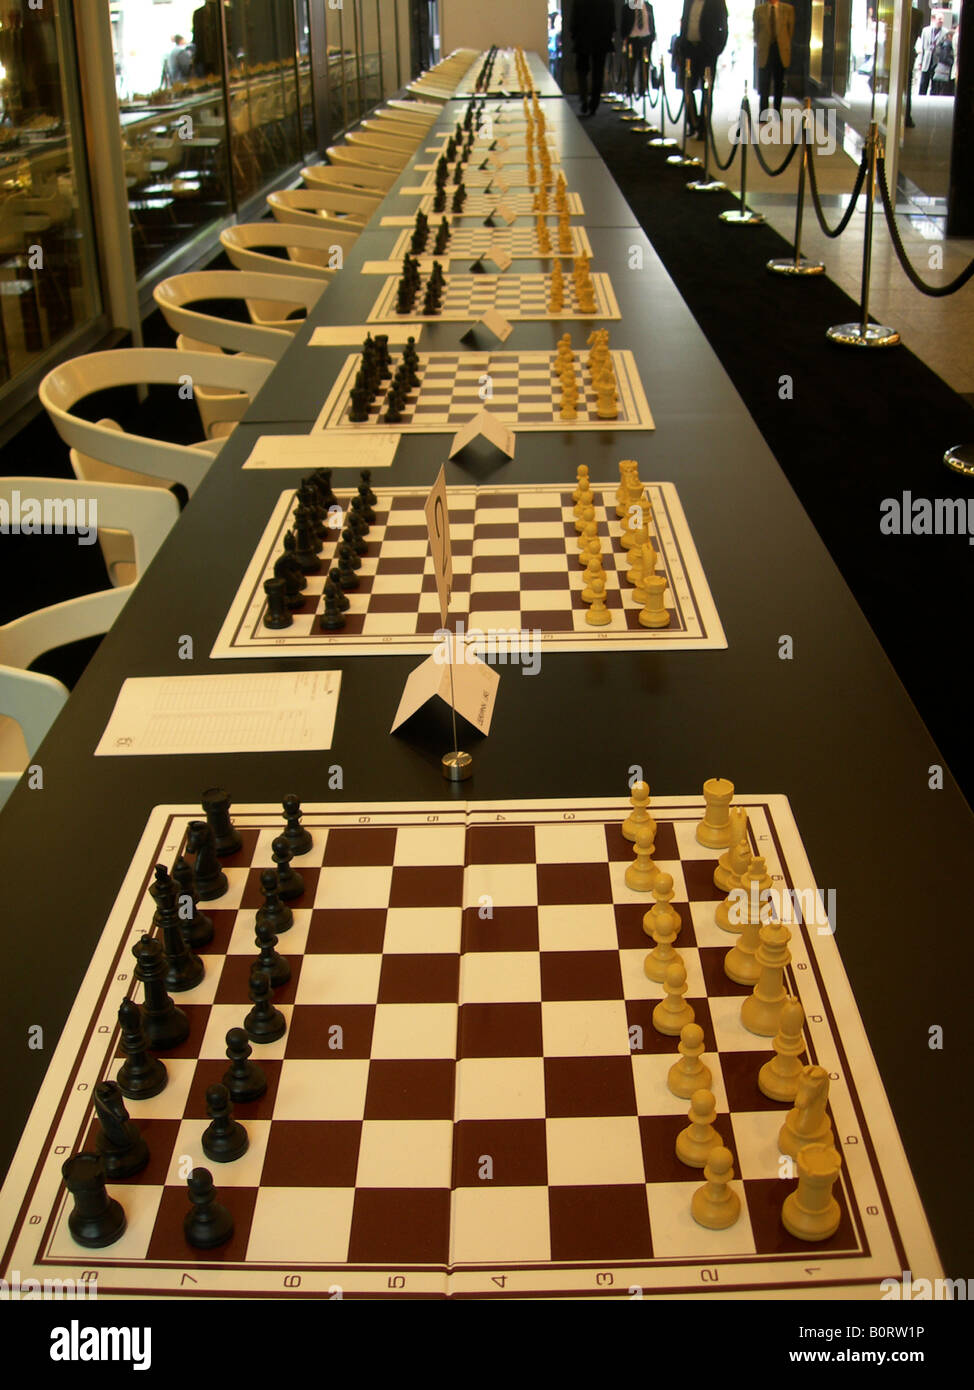 Simultaneous chess game, 4 April 2017: Simultaneous chess g…